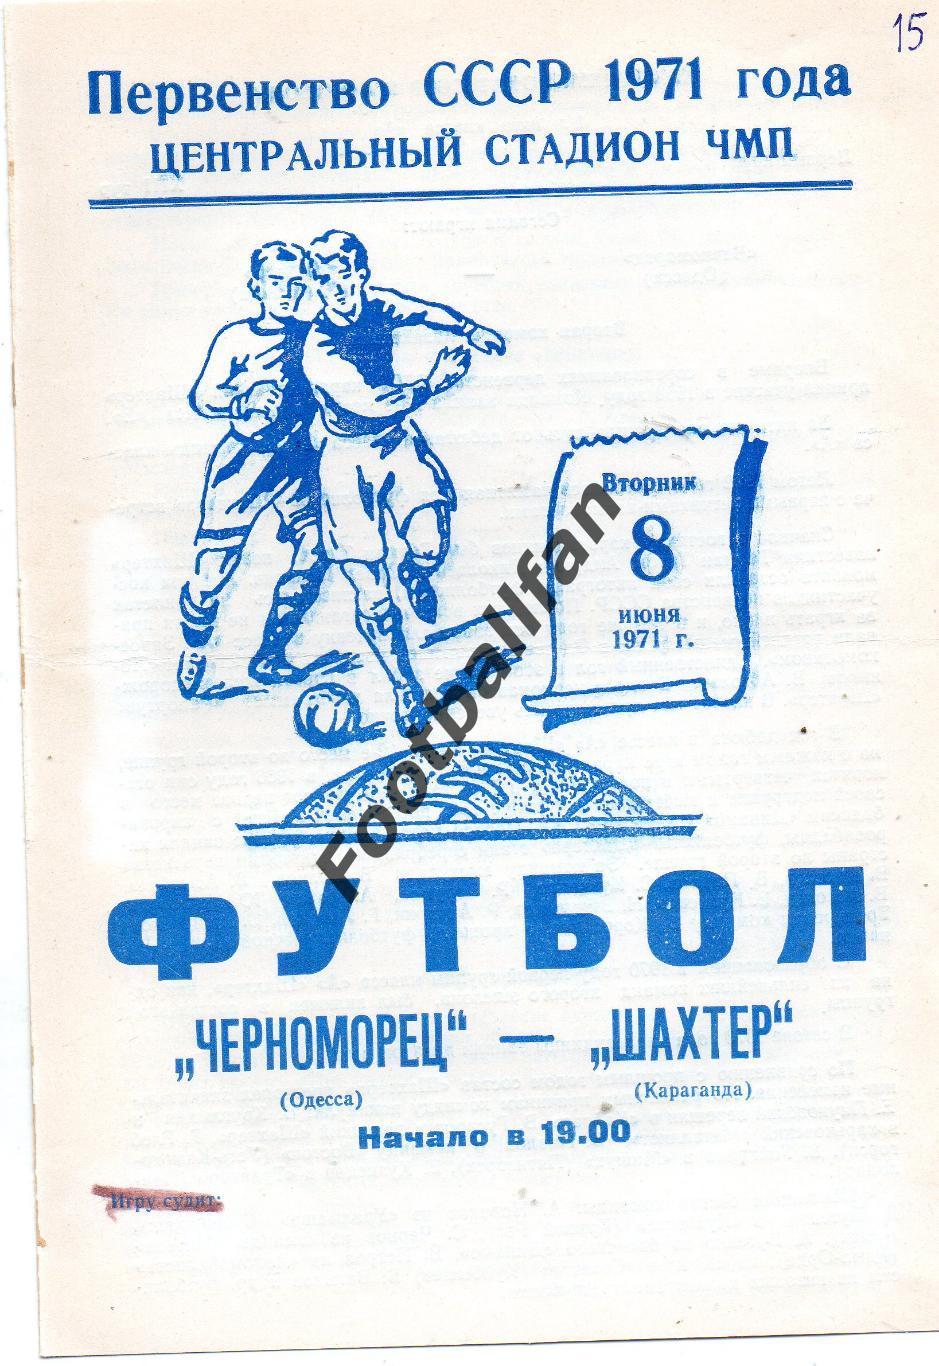 Черноморец Одесса - Шахтер Караганда 08.06.1971